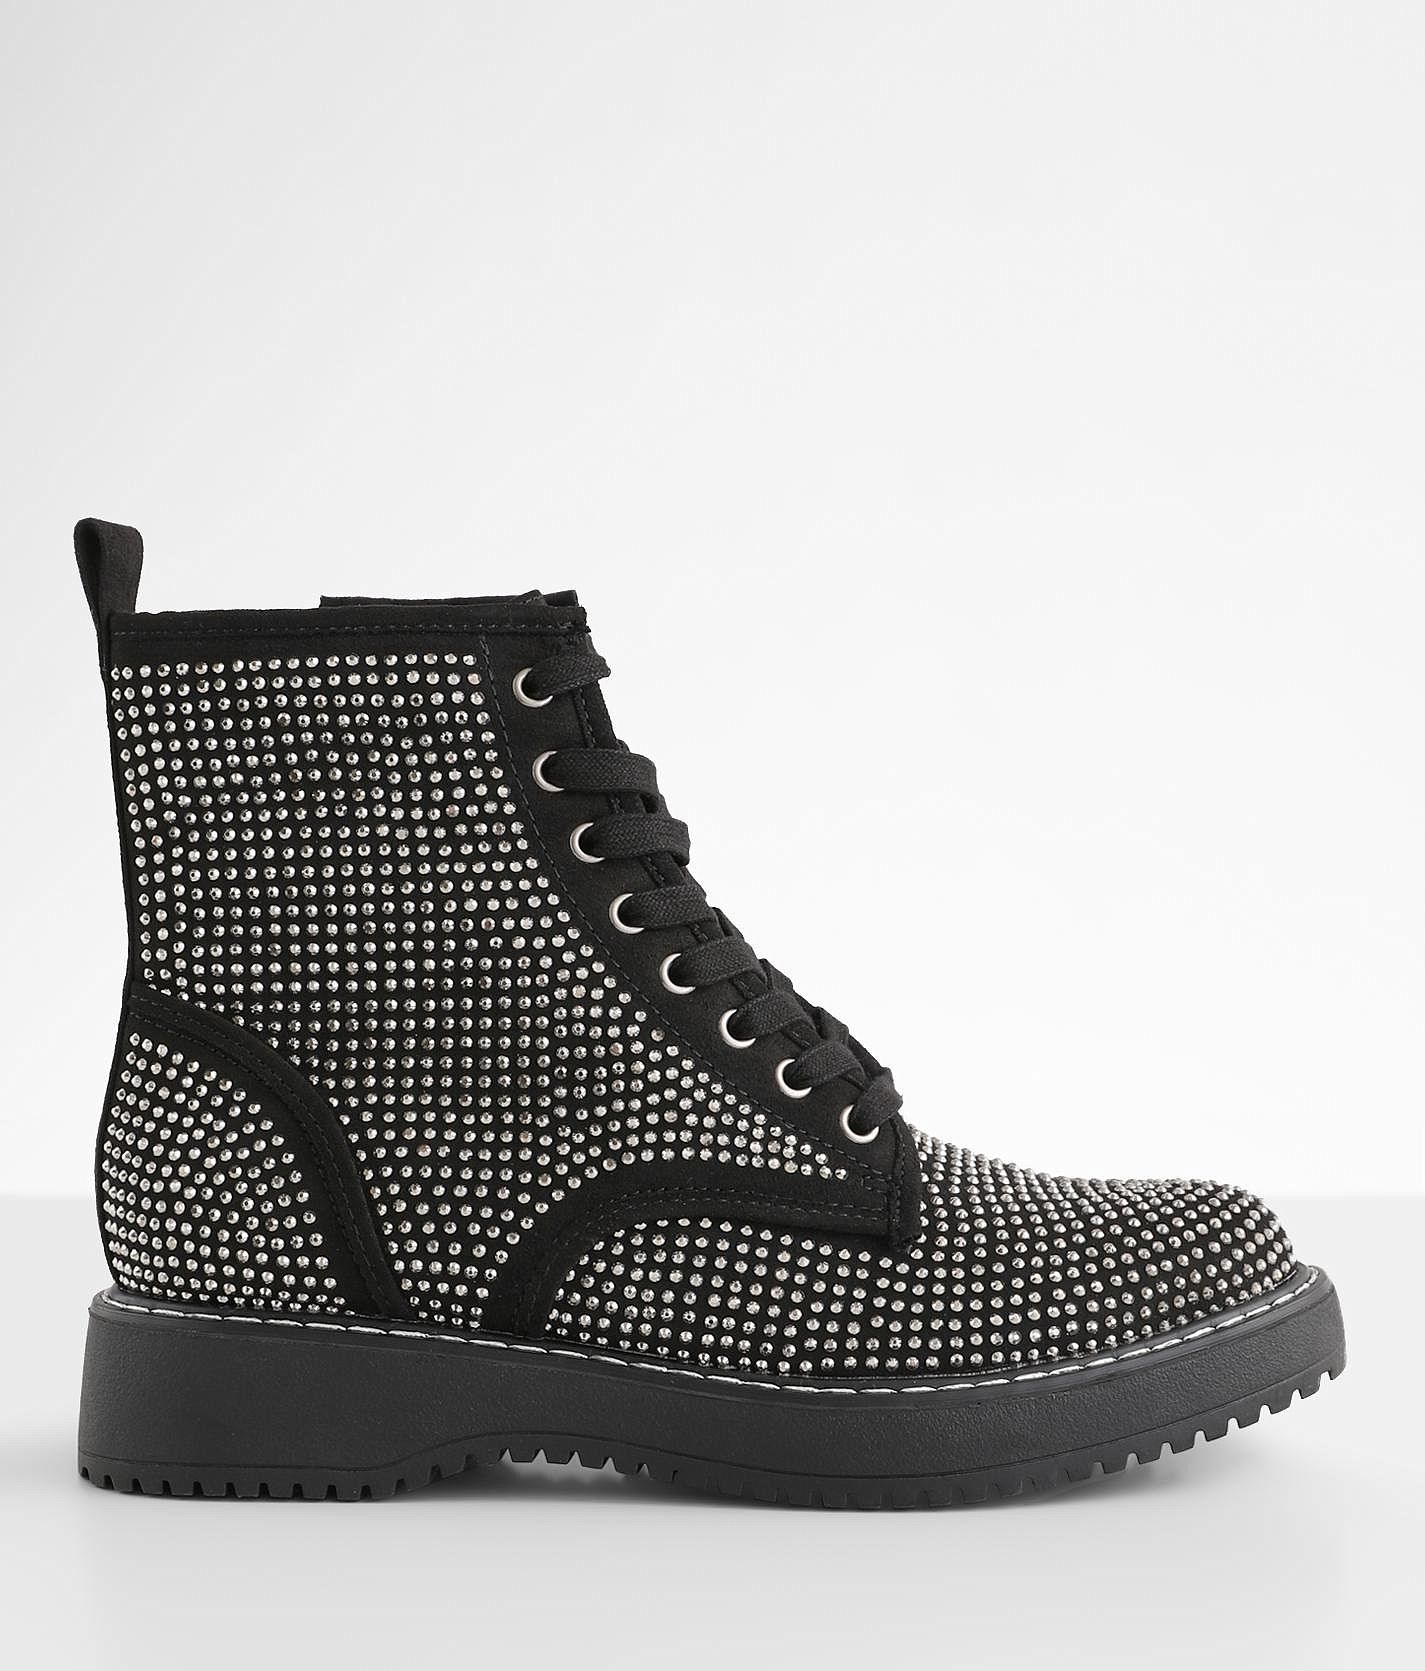 Madden Girl Kurrt Glitz Combat Boot - Women's Shoes in Black Multi